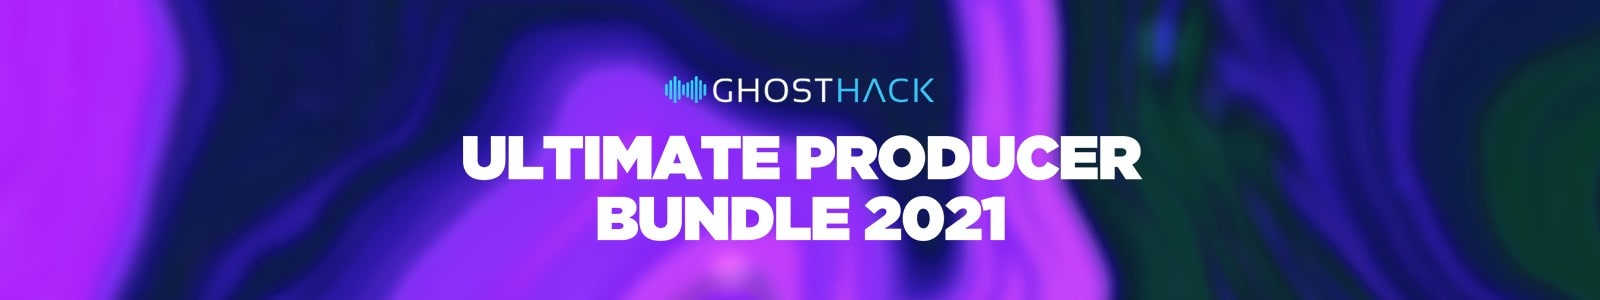 Ghosthack Ultimate Producer Bundle 2021